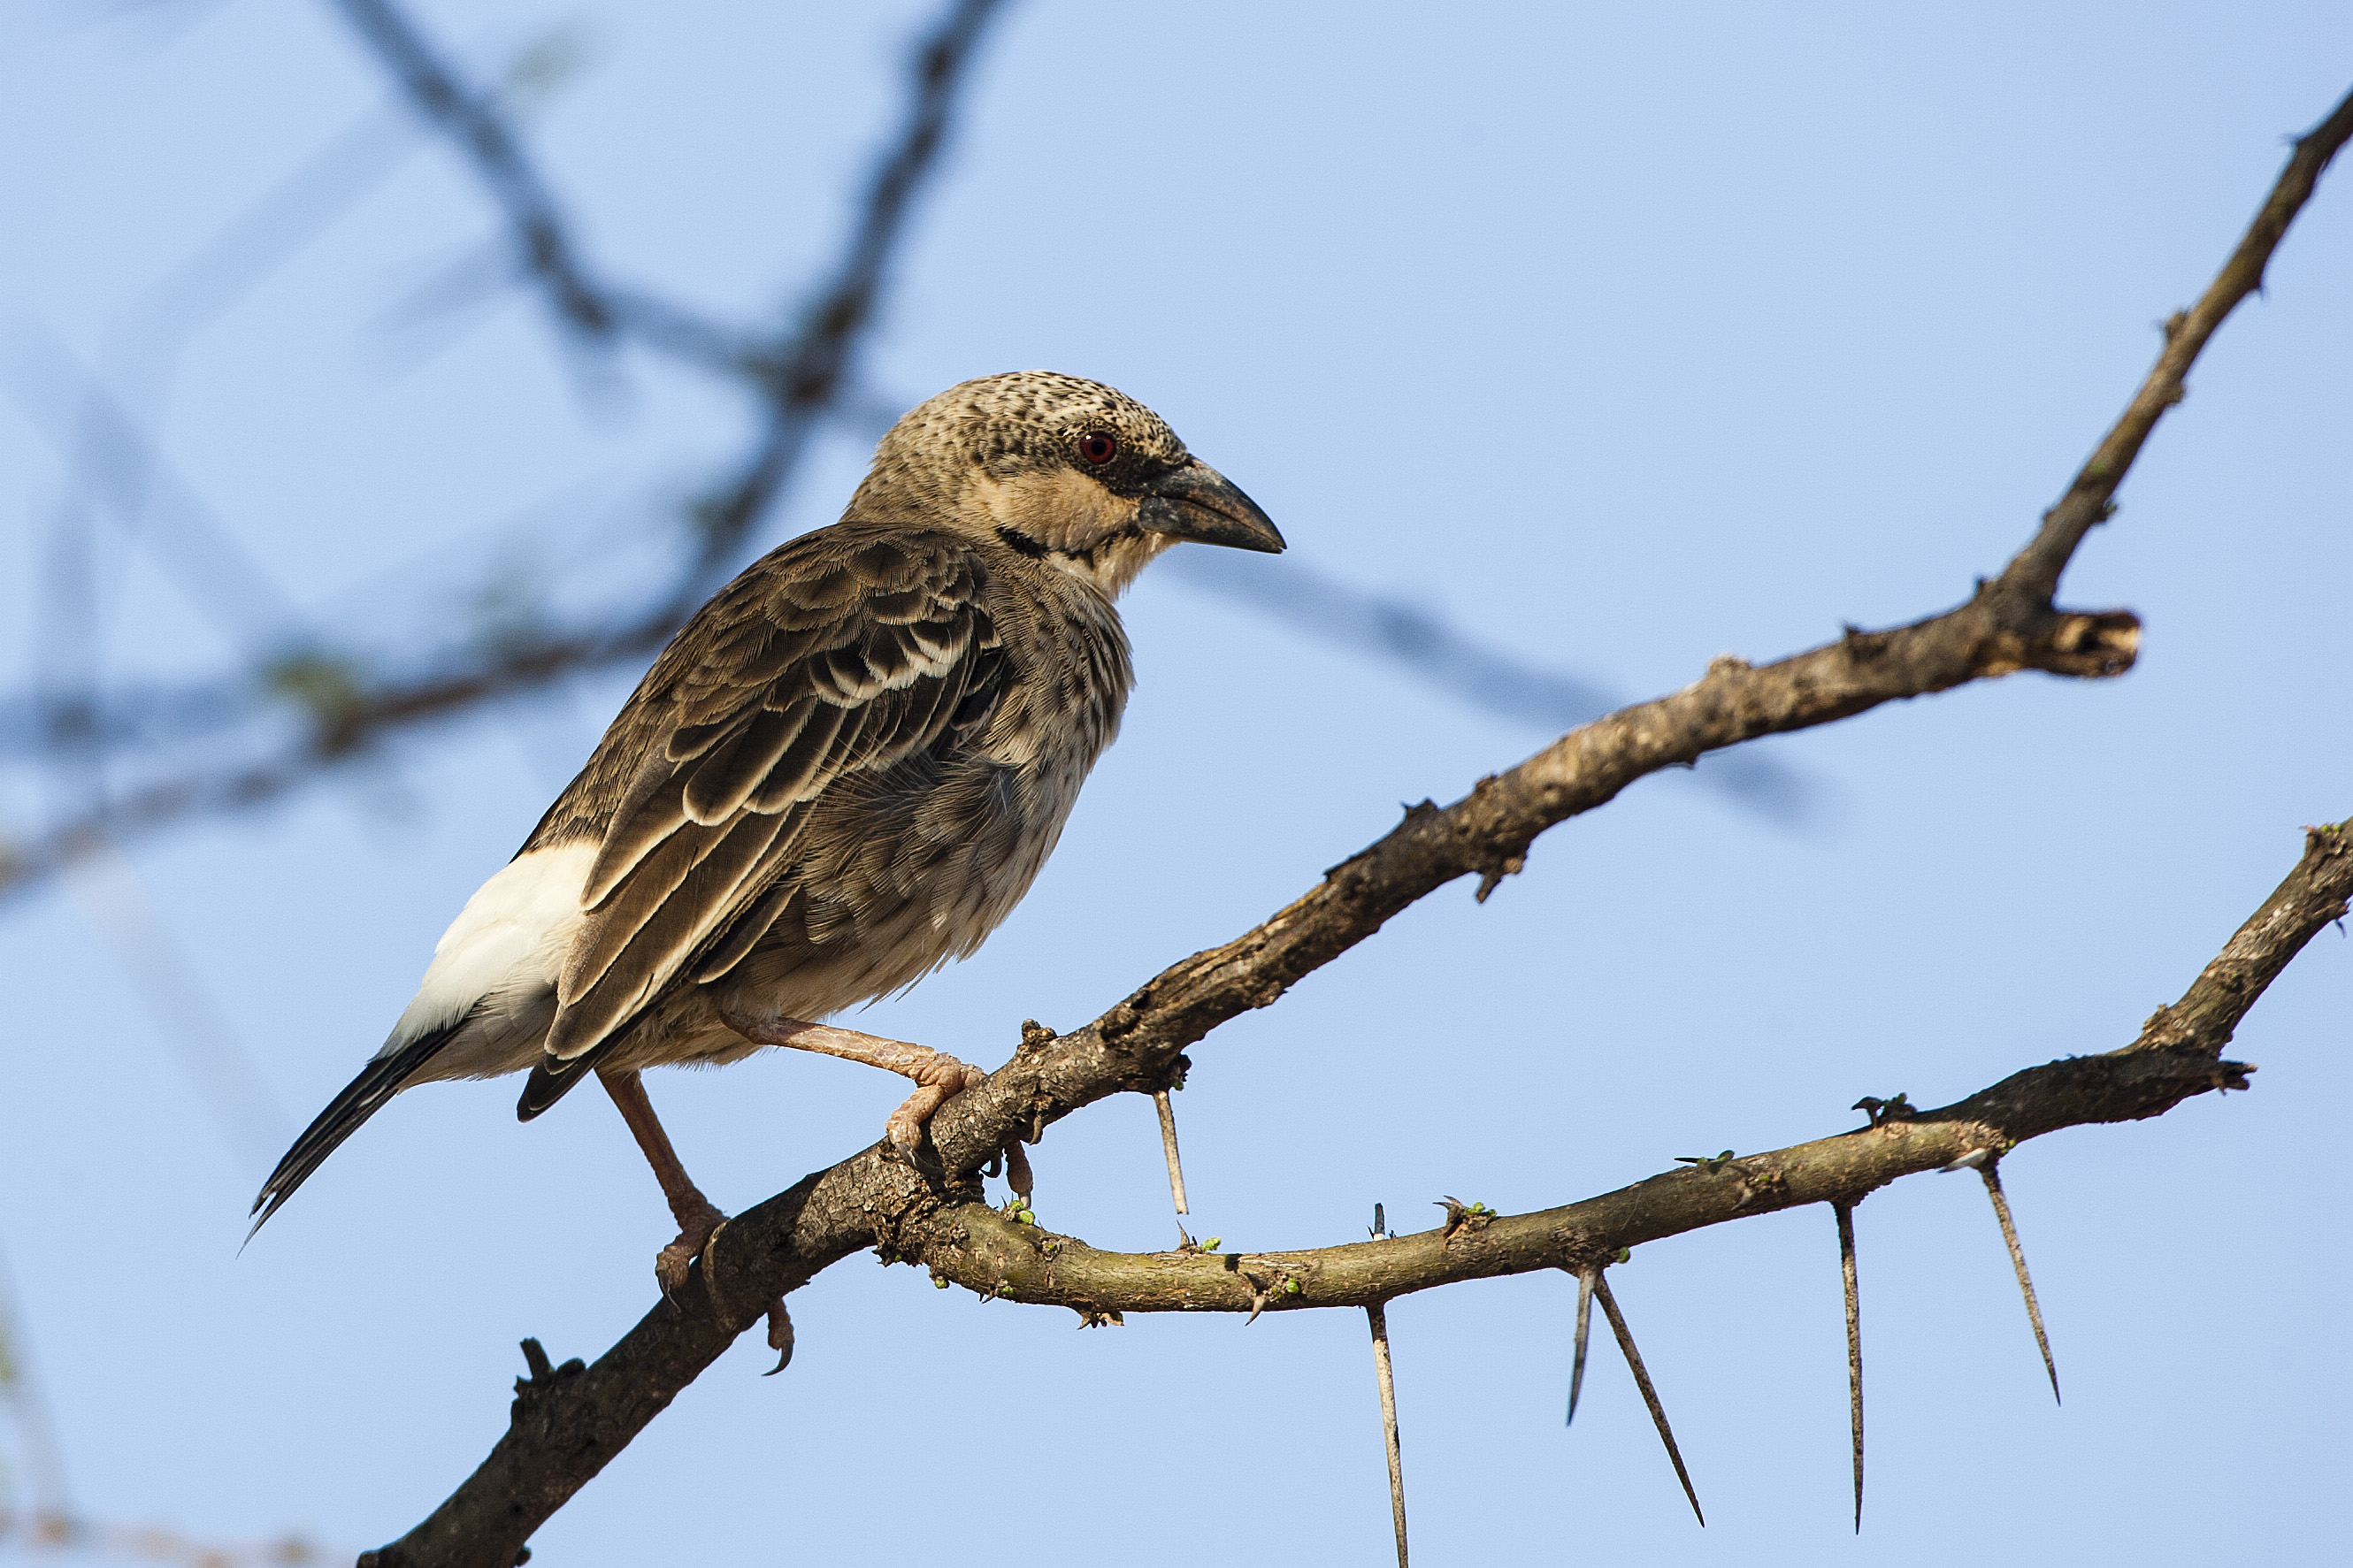 Donaldson-Smith's sparrow-weaver...